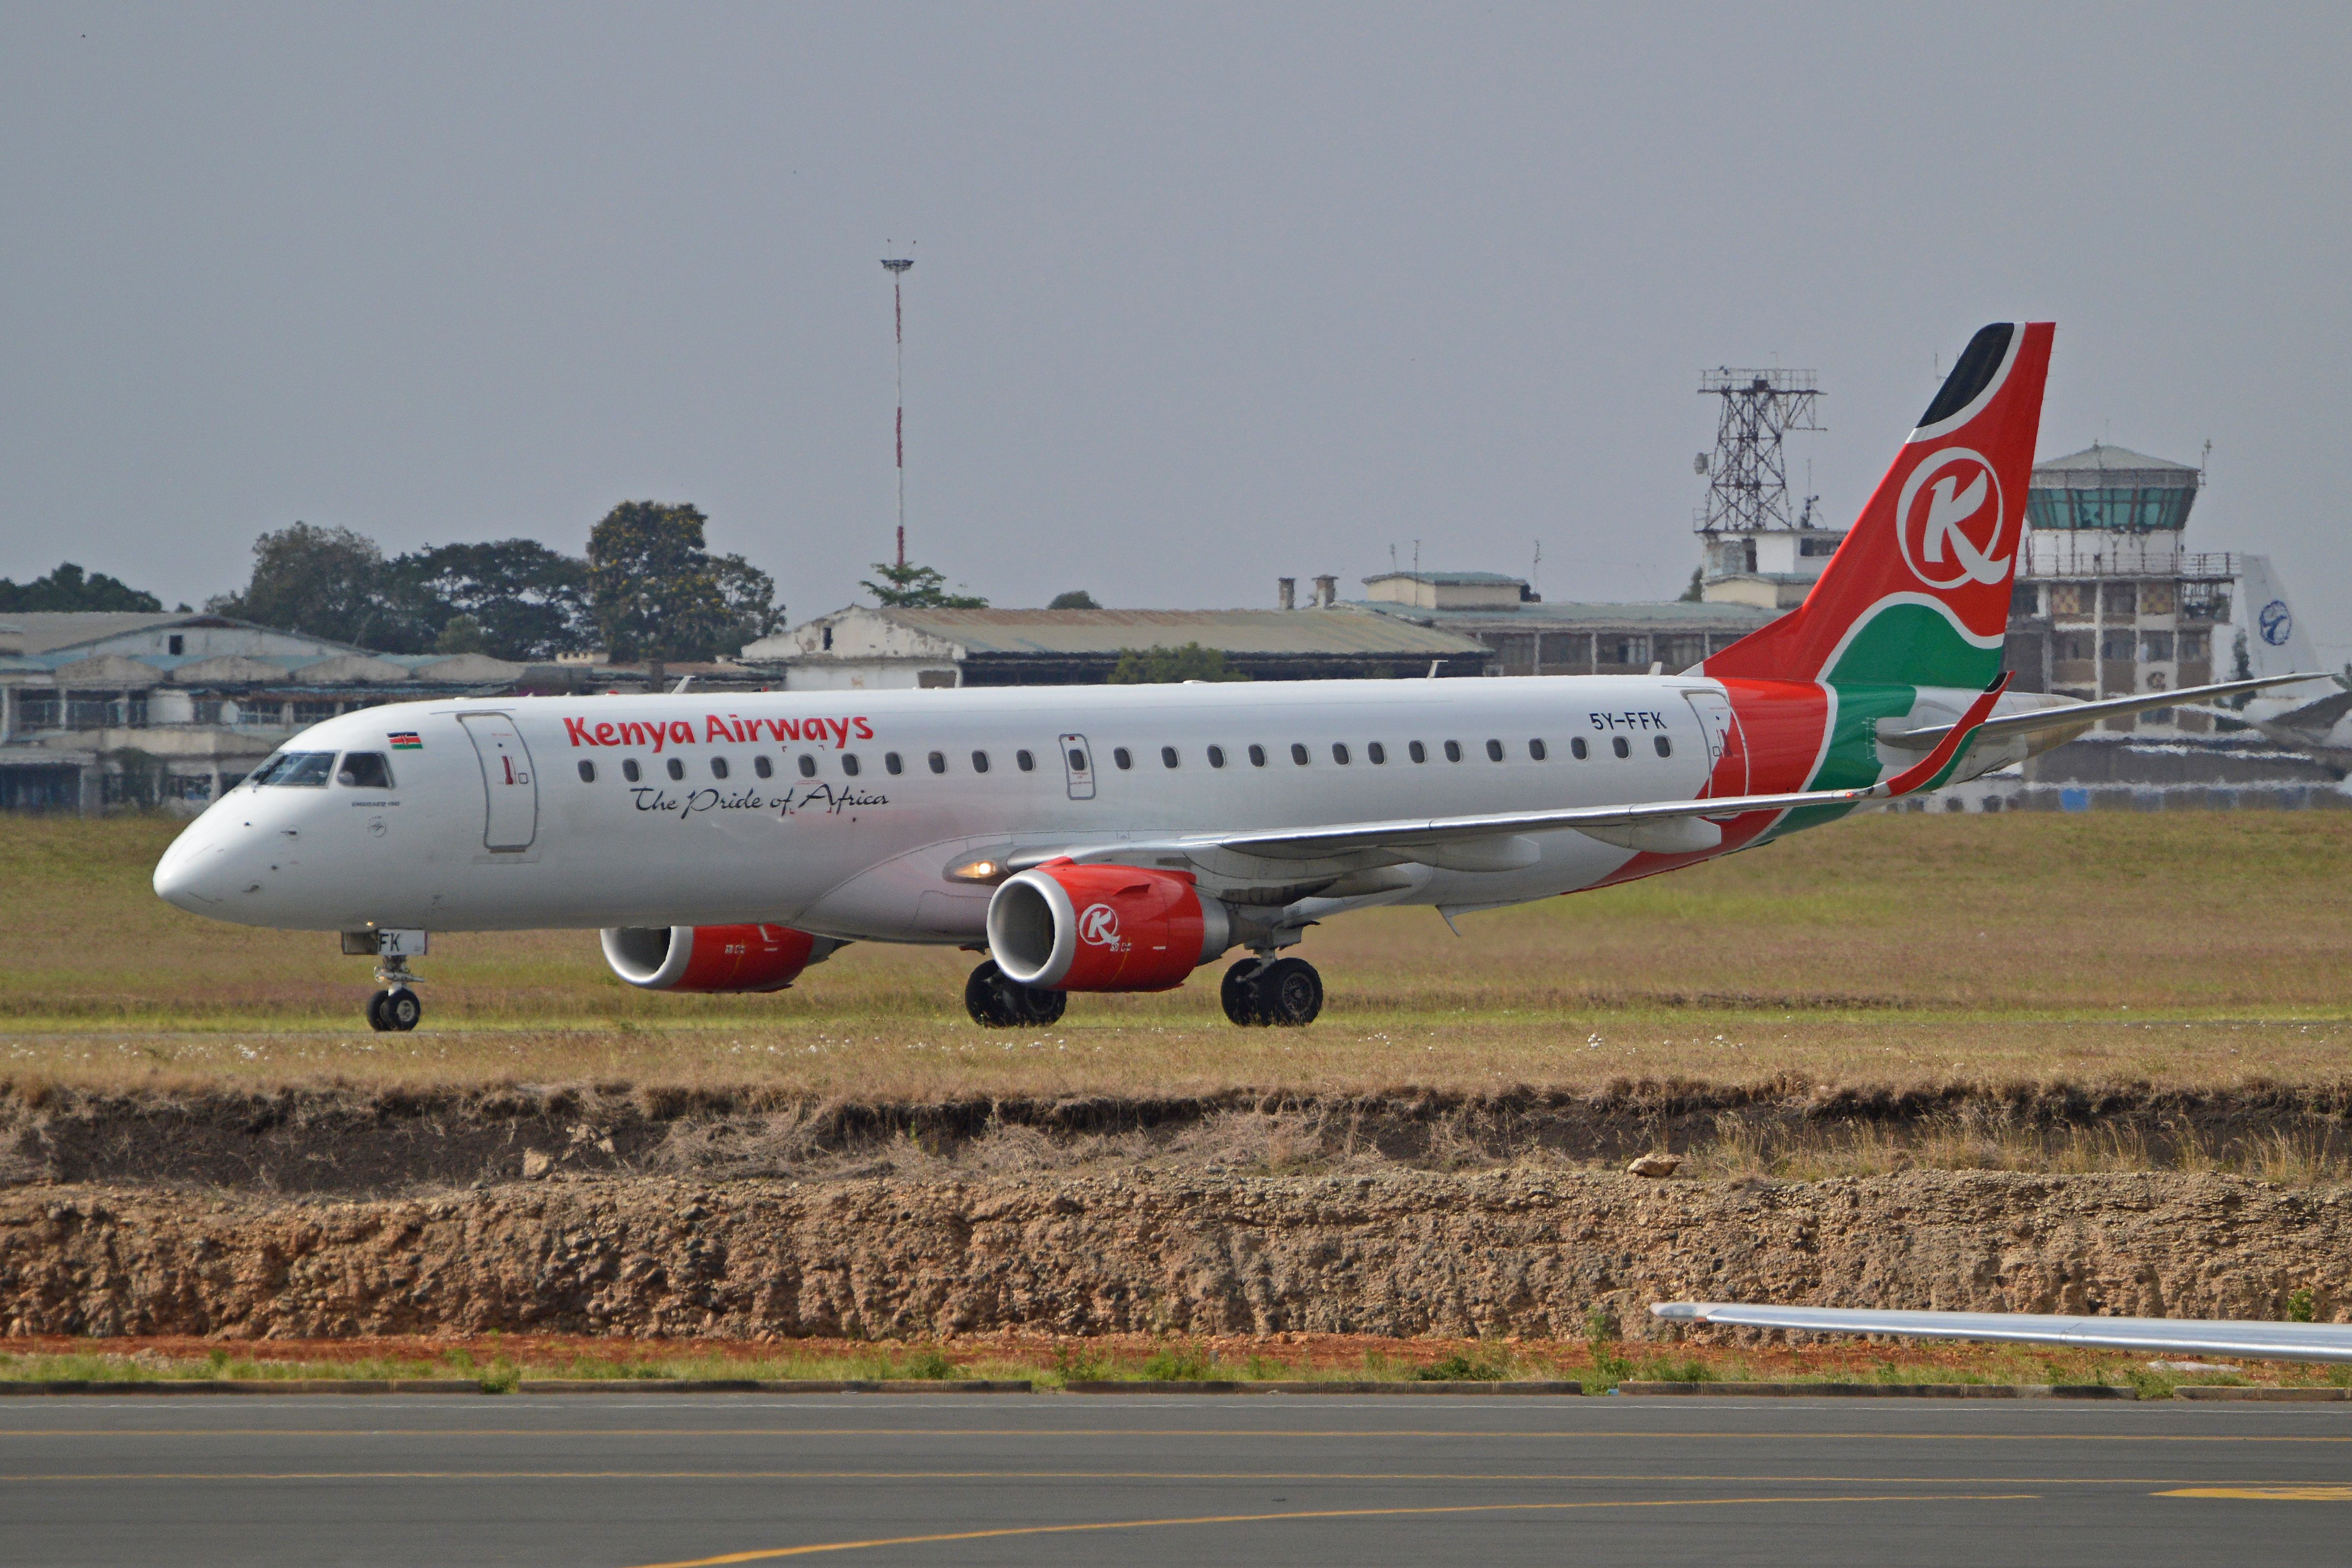 Embraer E190: Kenya Airways' Most Used Aircraft